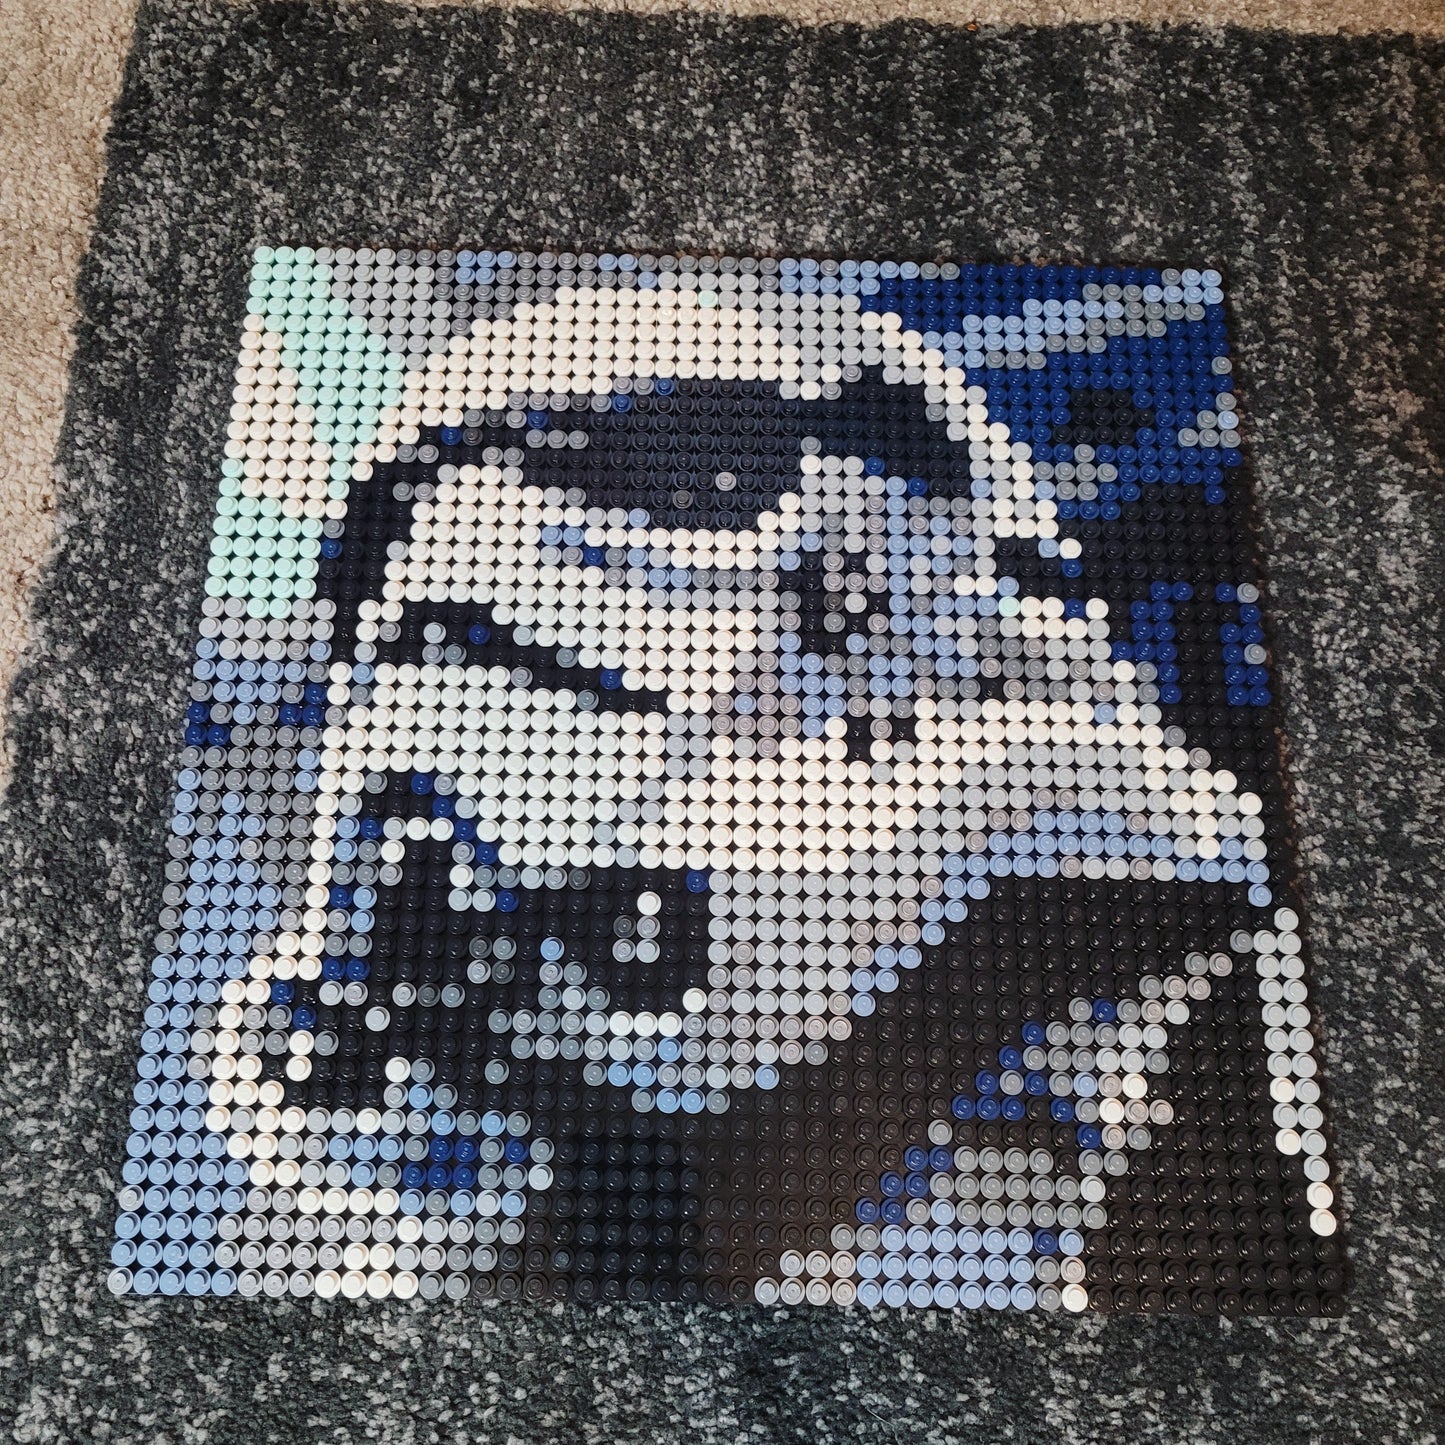 Stormtrooper - Custom Art Mosaic